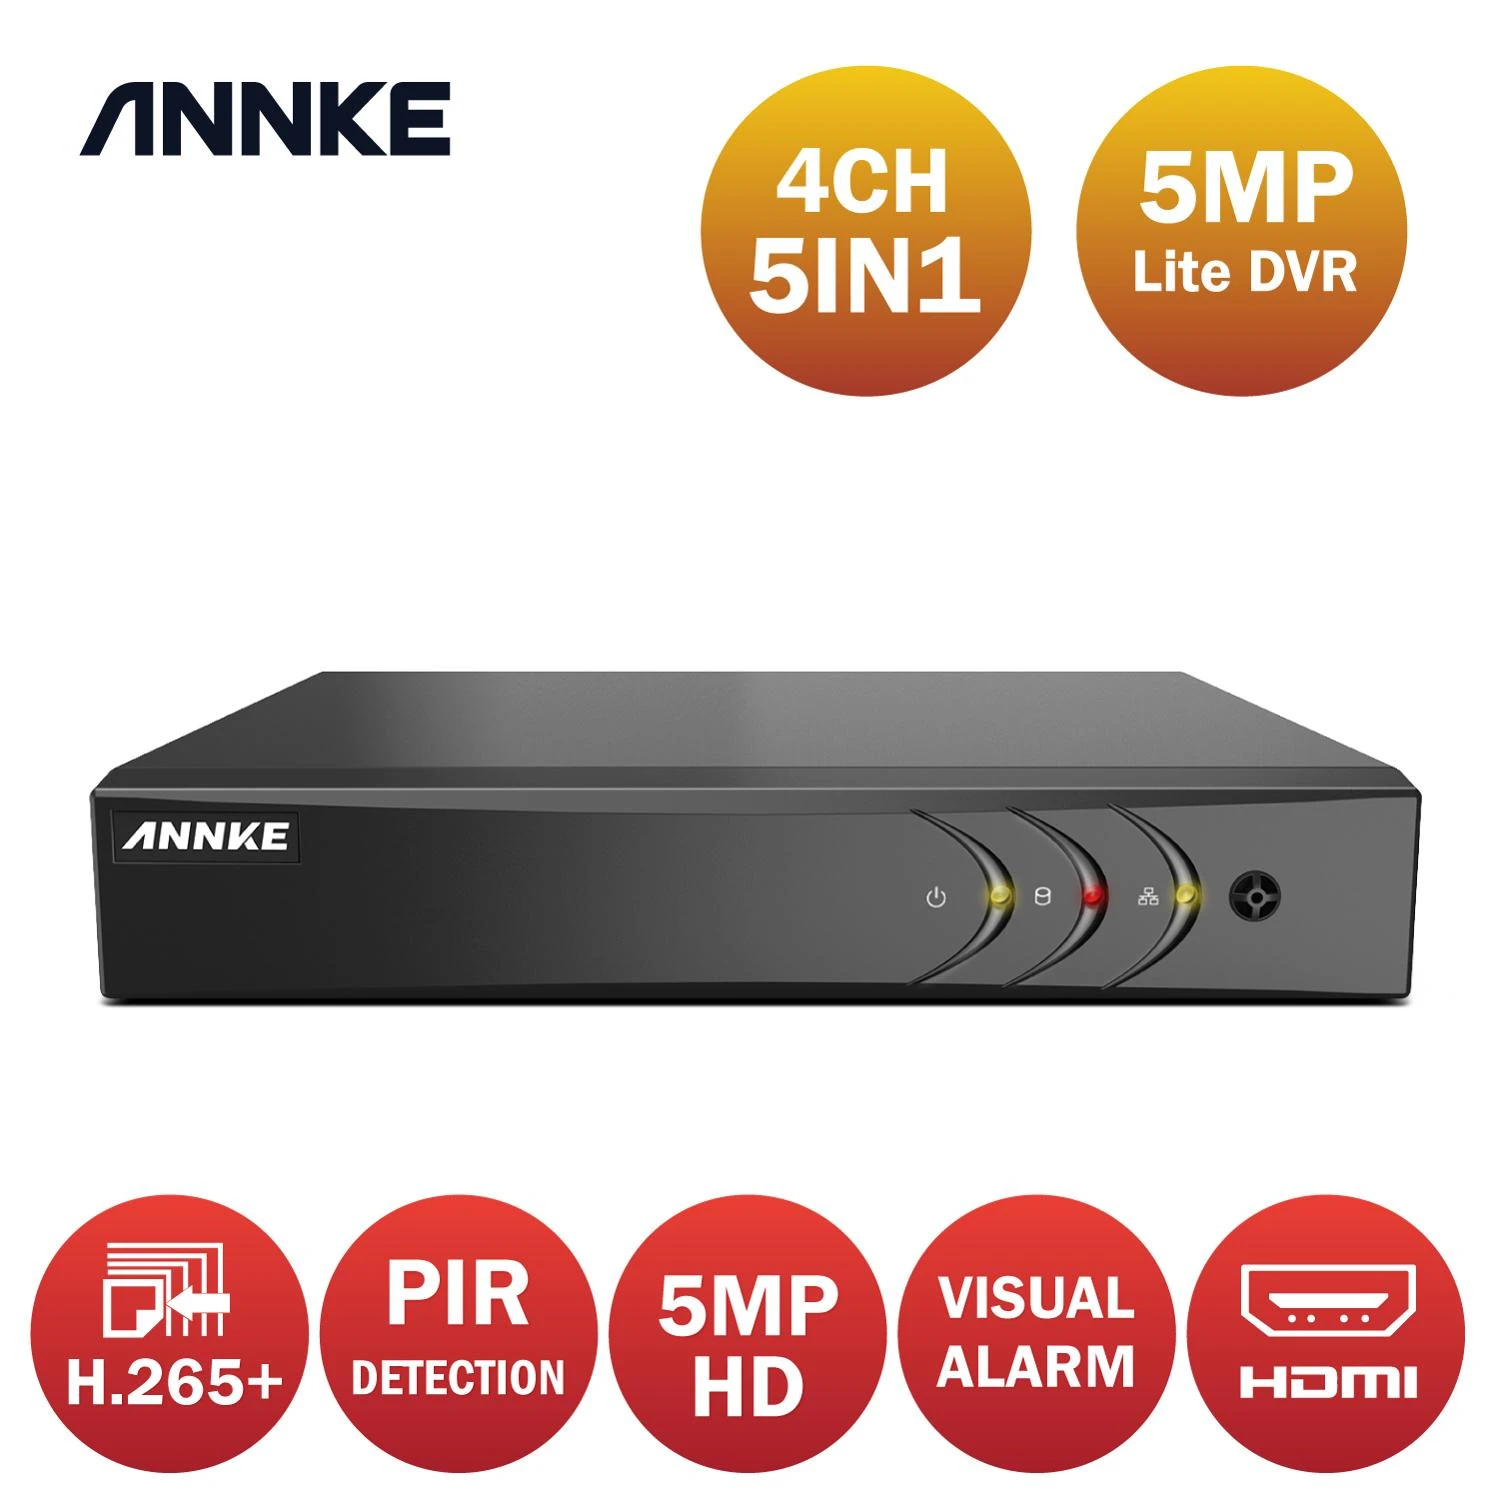 ANNKE 5MP Lite 4CH HD Video Surveillance DVR 5IN1 H.265+ Digital Recorder PIR Motion Detection For 2MP 3MP IP CCTV Cameras